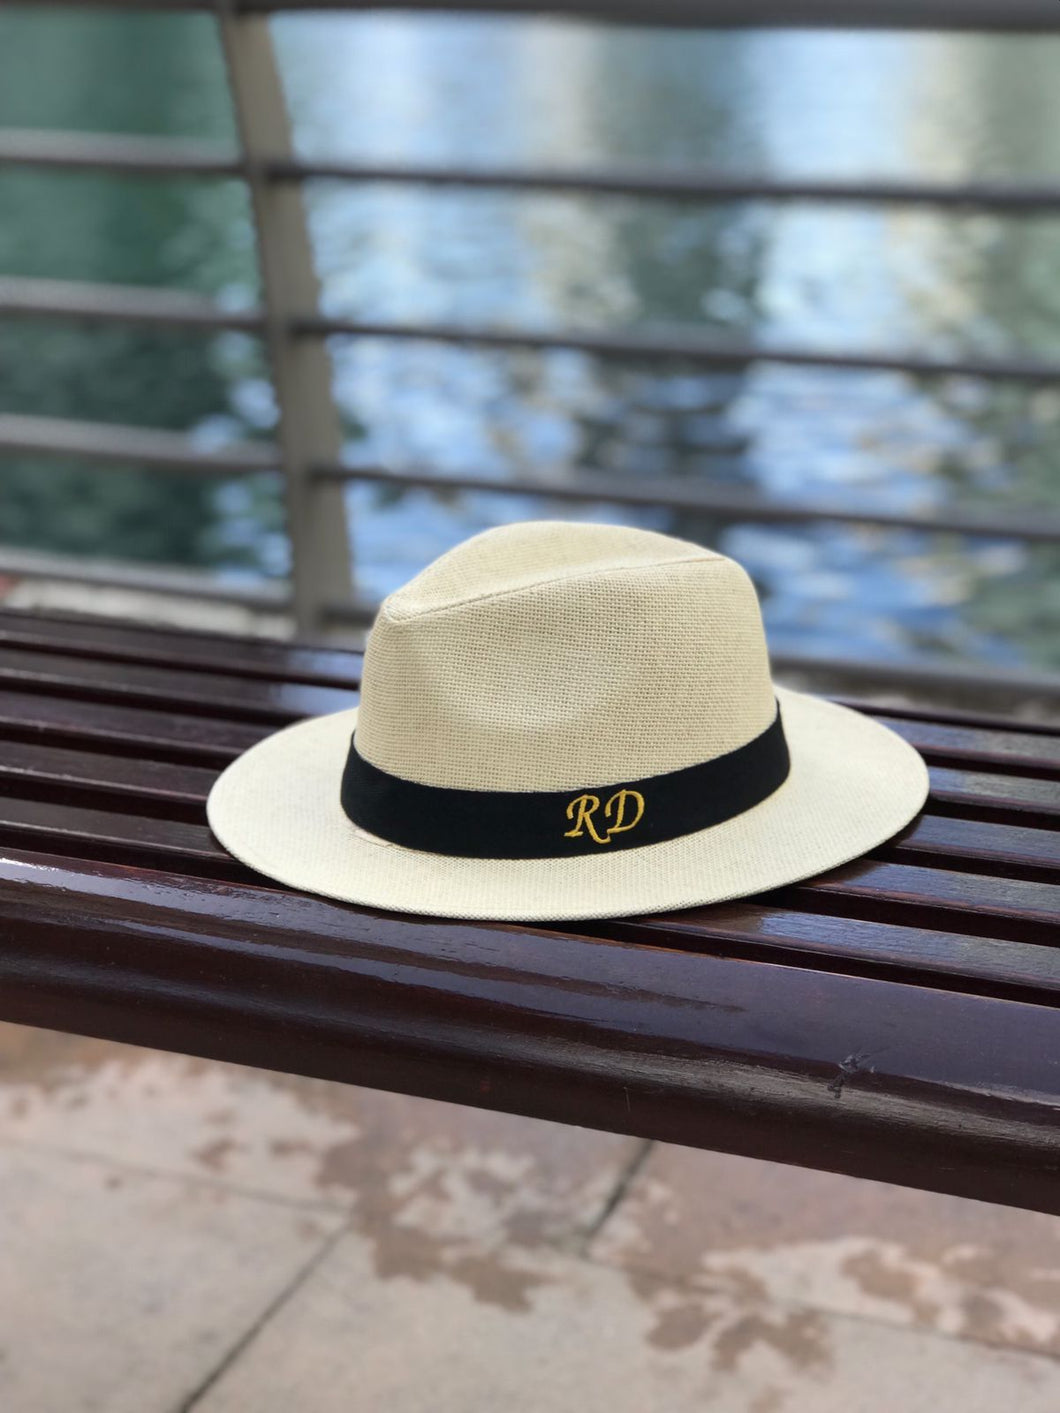 Customizable hat